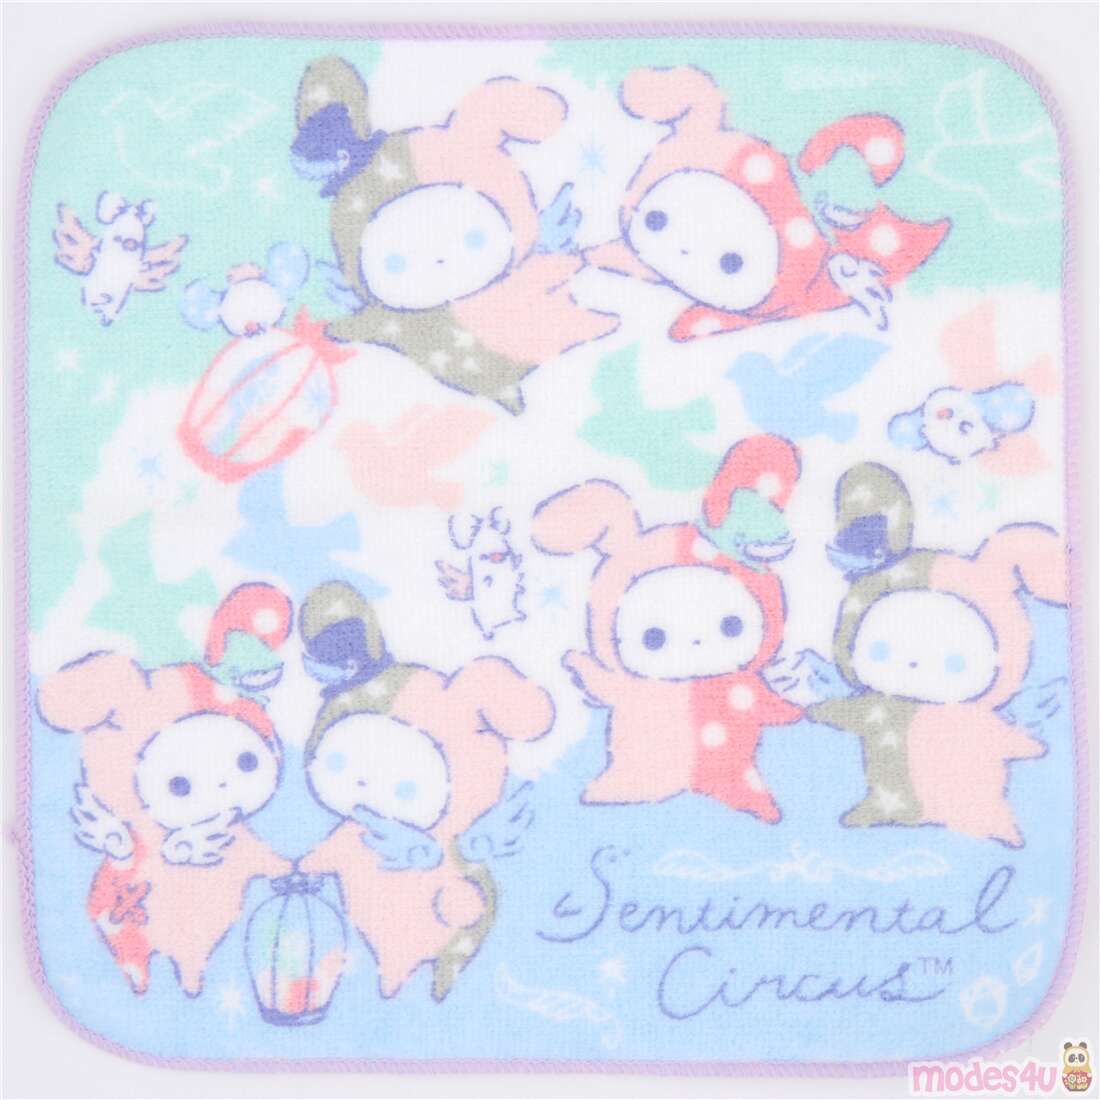 Sentimental Circus Shappo & Spica mini Towel Hansel and Gretel San-X Japan 